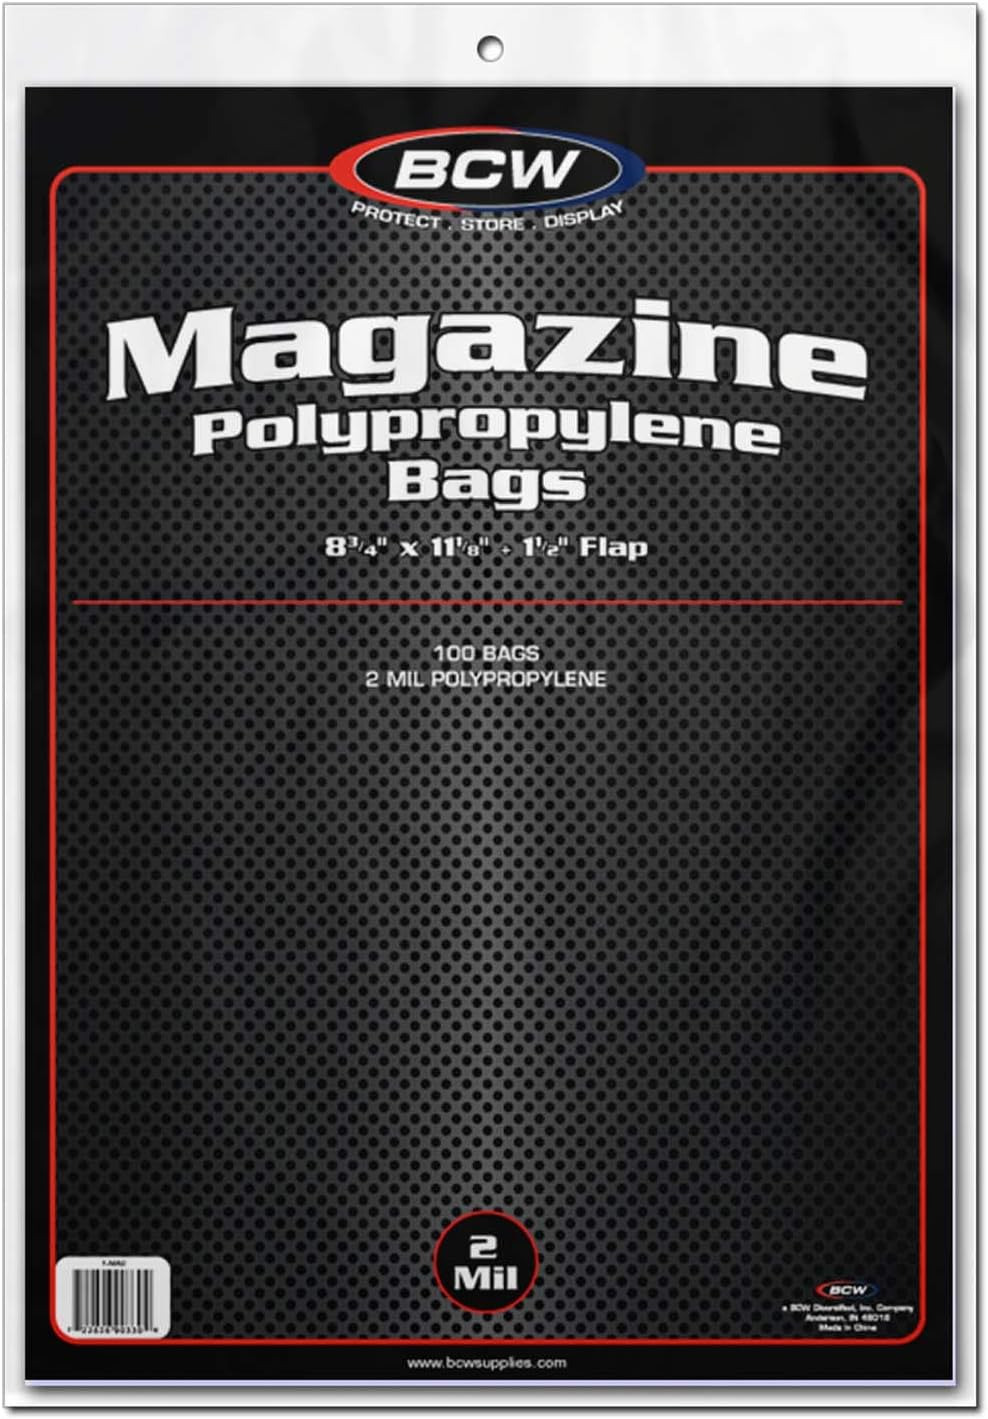 BCW Magazine Bags - 1 Pack of 100 | Acid-Free, Crystal Clear Polypropylene Sleev